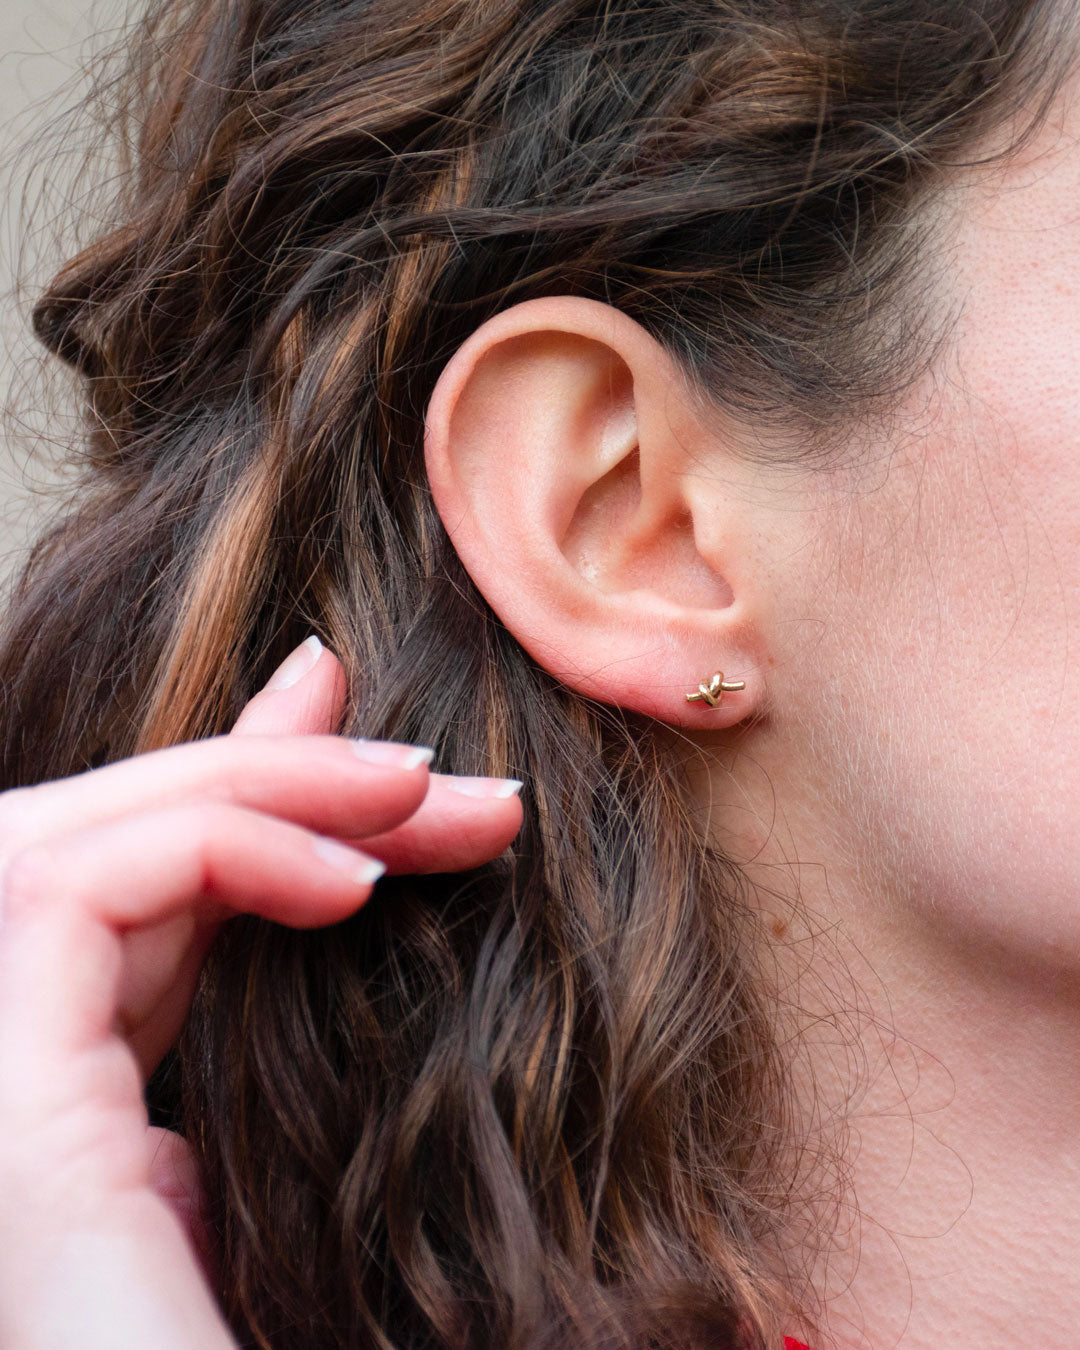 Detail of golden knot earrings worn